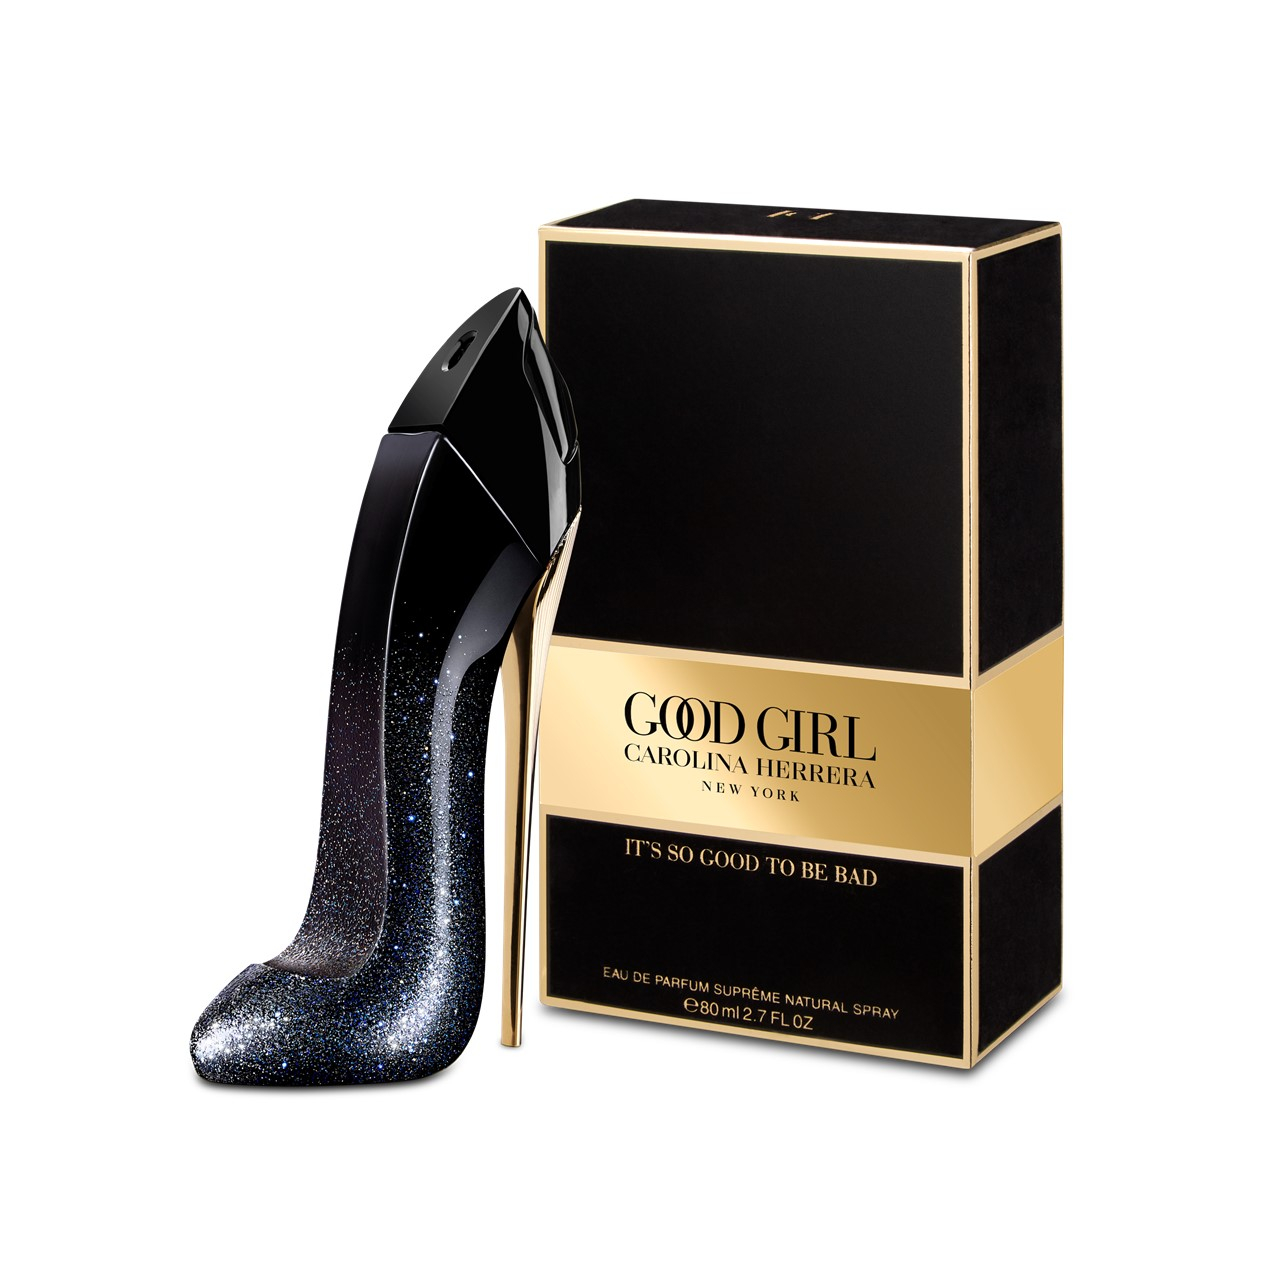 Carolina Herrera Very Good Girl Eau de Parfum Gift Set Limited